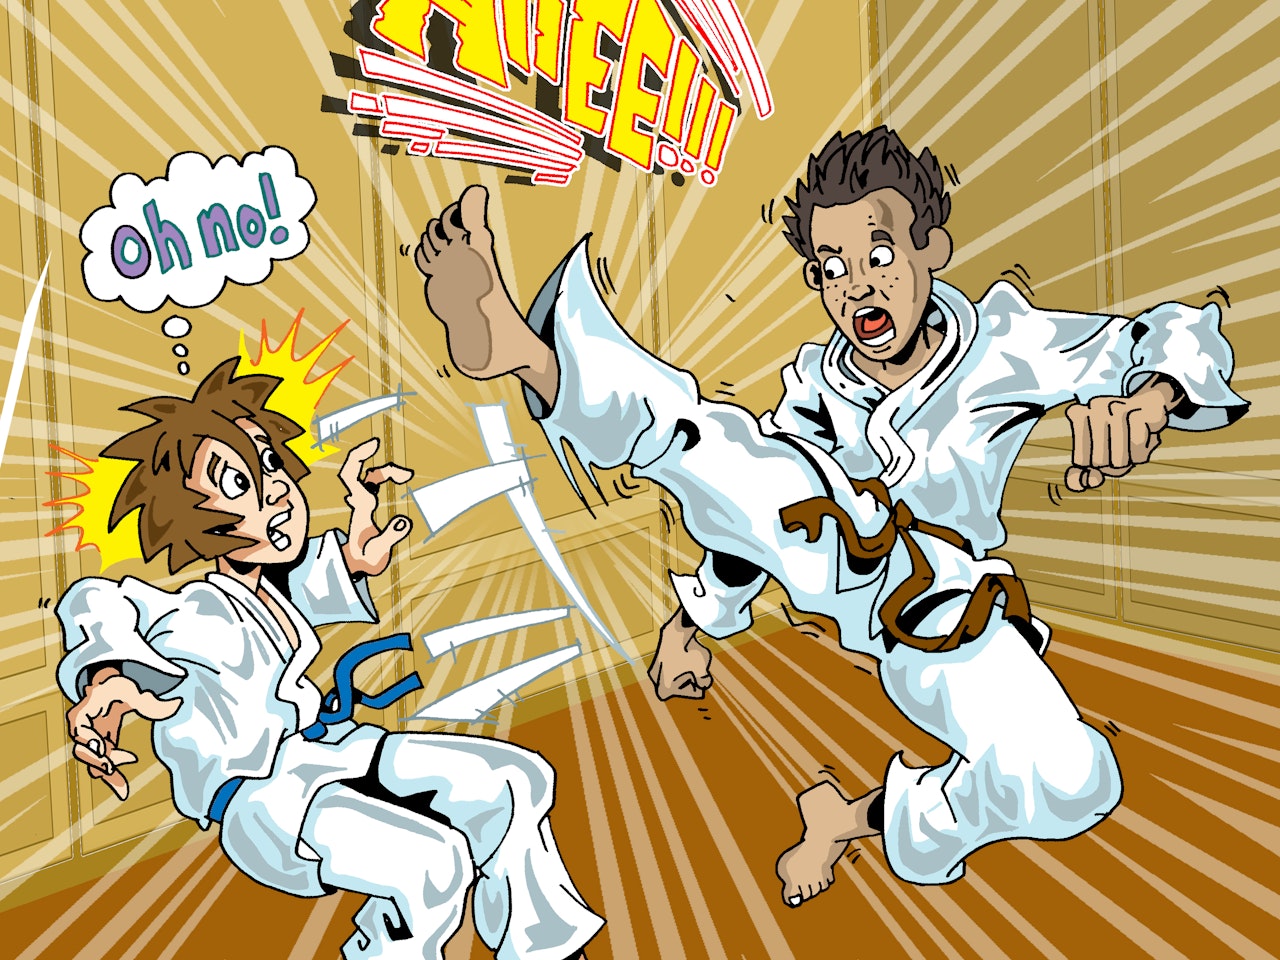 sad cafe martial arts kung fu fighting karate fantasy adventure Funky Happy manga anime childrens cartoon comic strip Book cover illustration animation